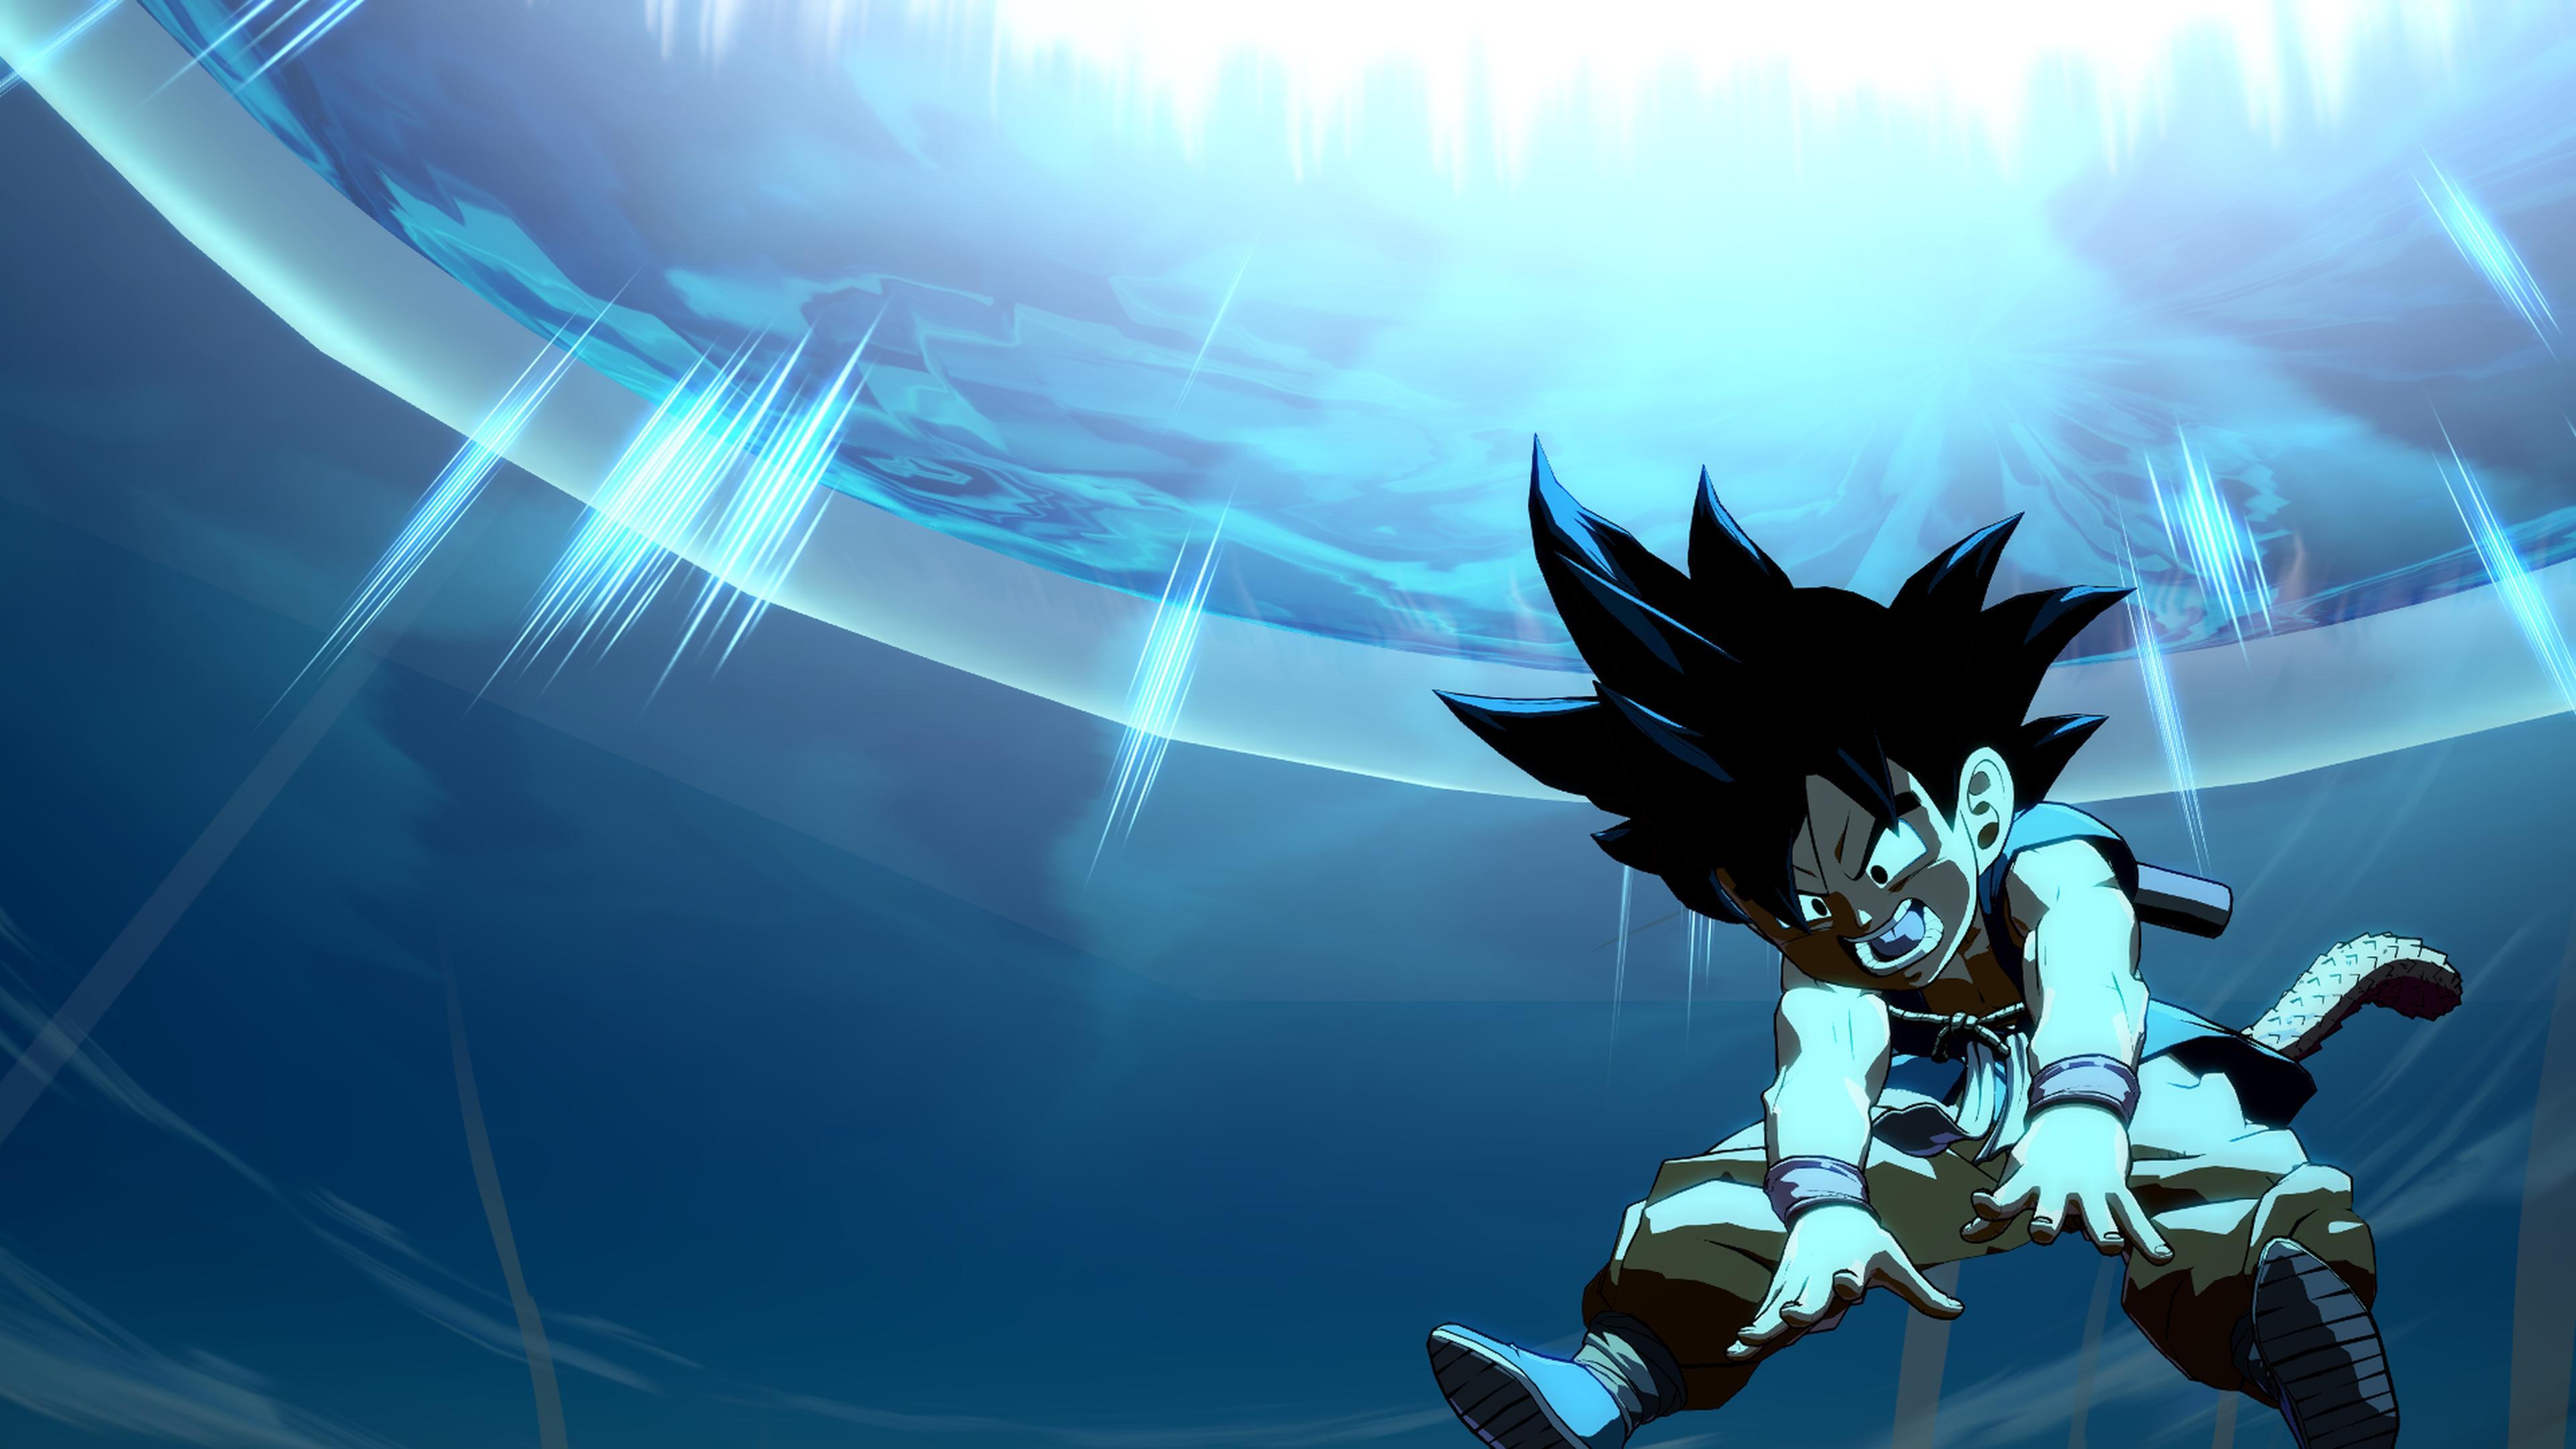 Kid Goku Wallpaper, HD Anime 4K Wallpaper, Image, Photo and Background